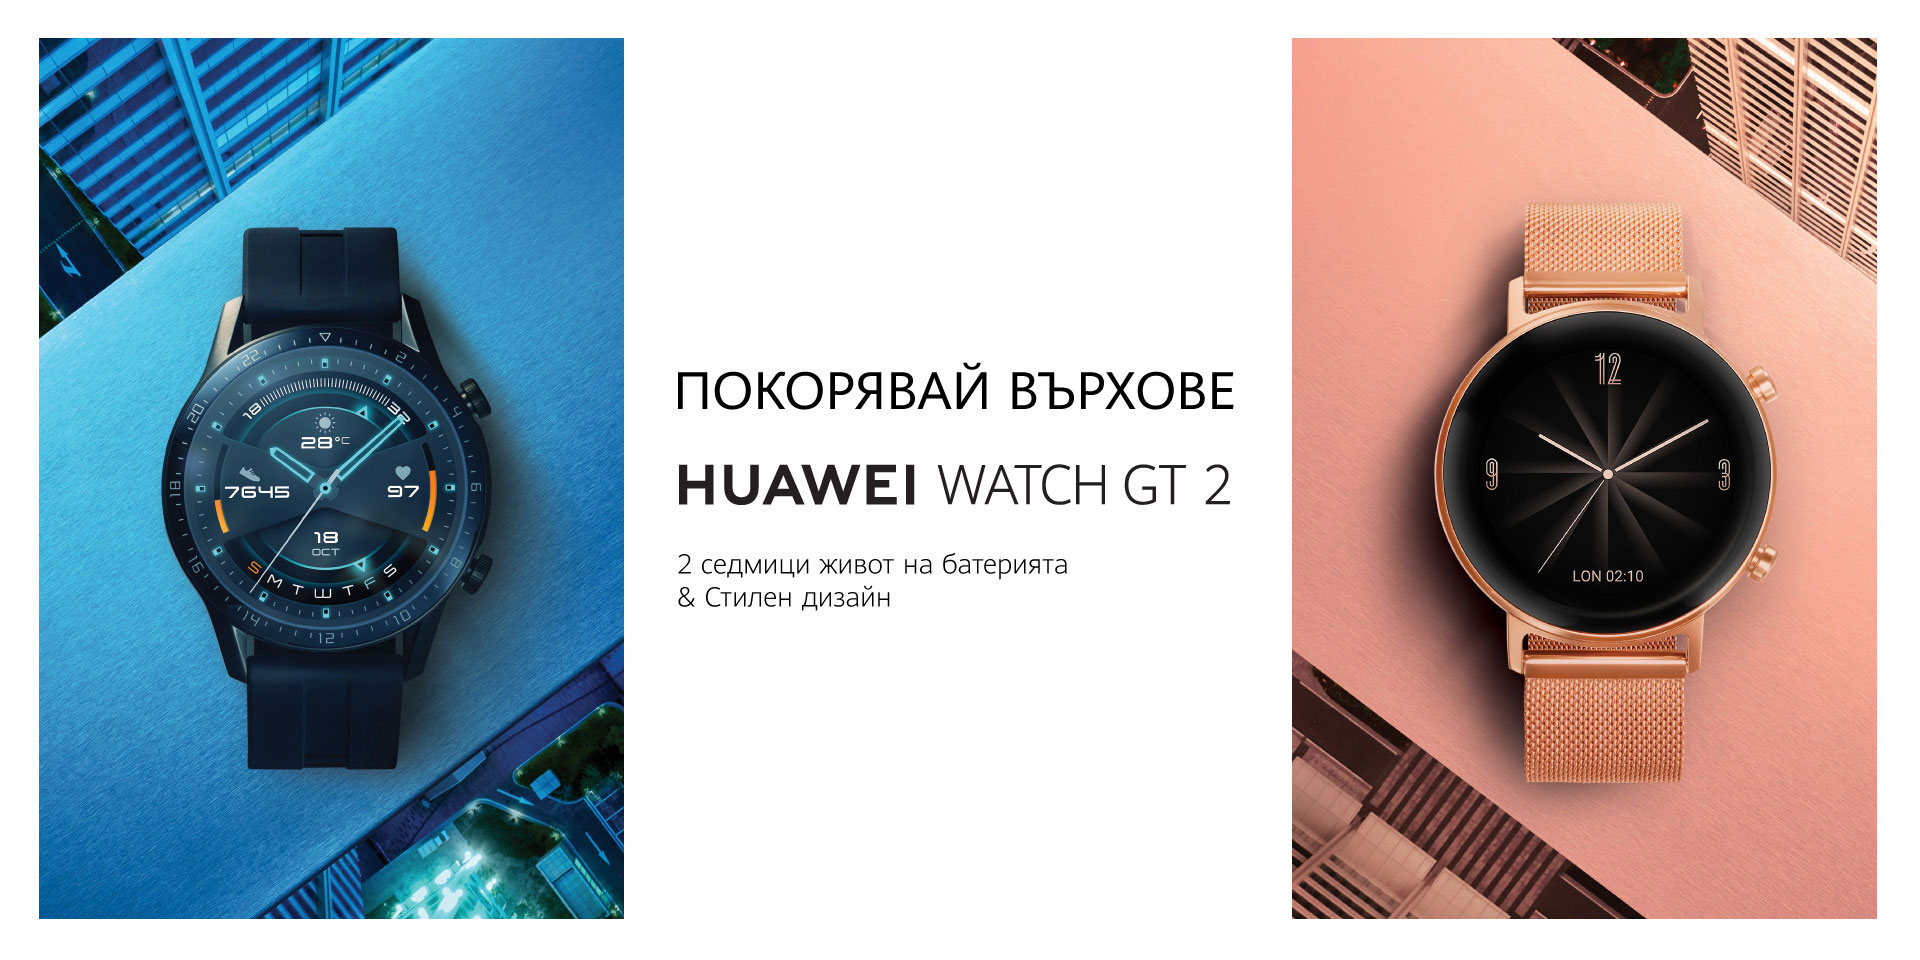 Mil b19 gold ss. Смарт-часы Huawei gt 3 mil-b19 Gold SS высотомер. Смарт-часы Huawei gt 3 mil-b19 Gold SS / White Leather. Huawei watch Ultimate. Huawei watch gt2 42mm розовое золото.